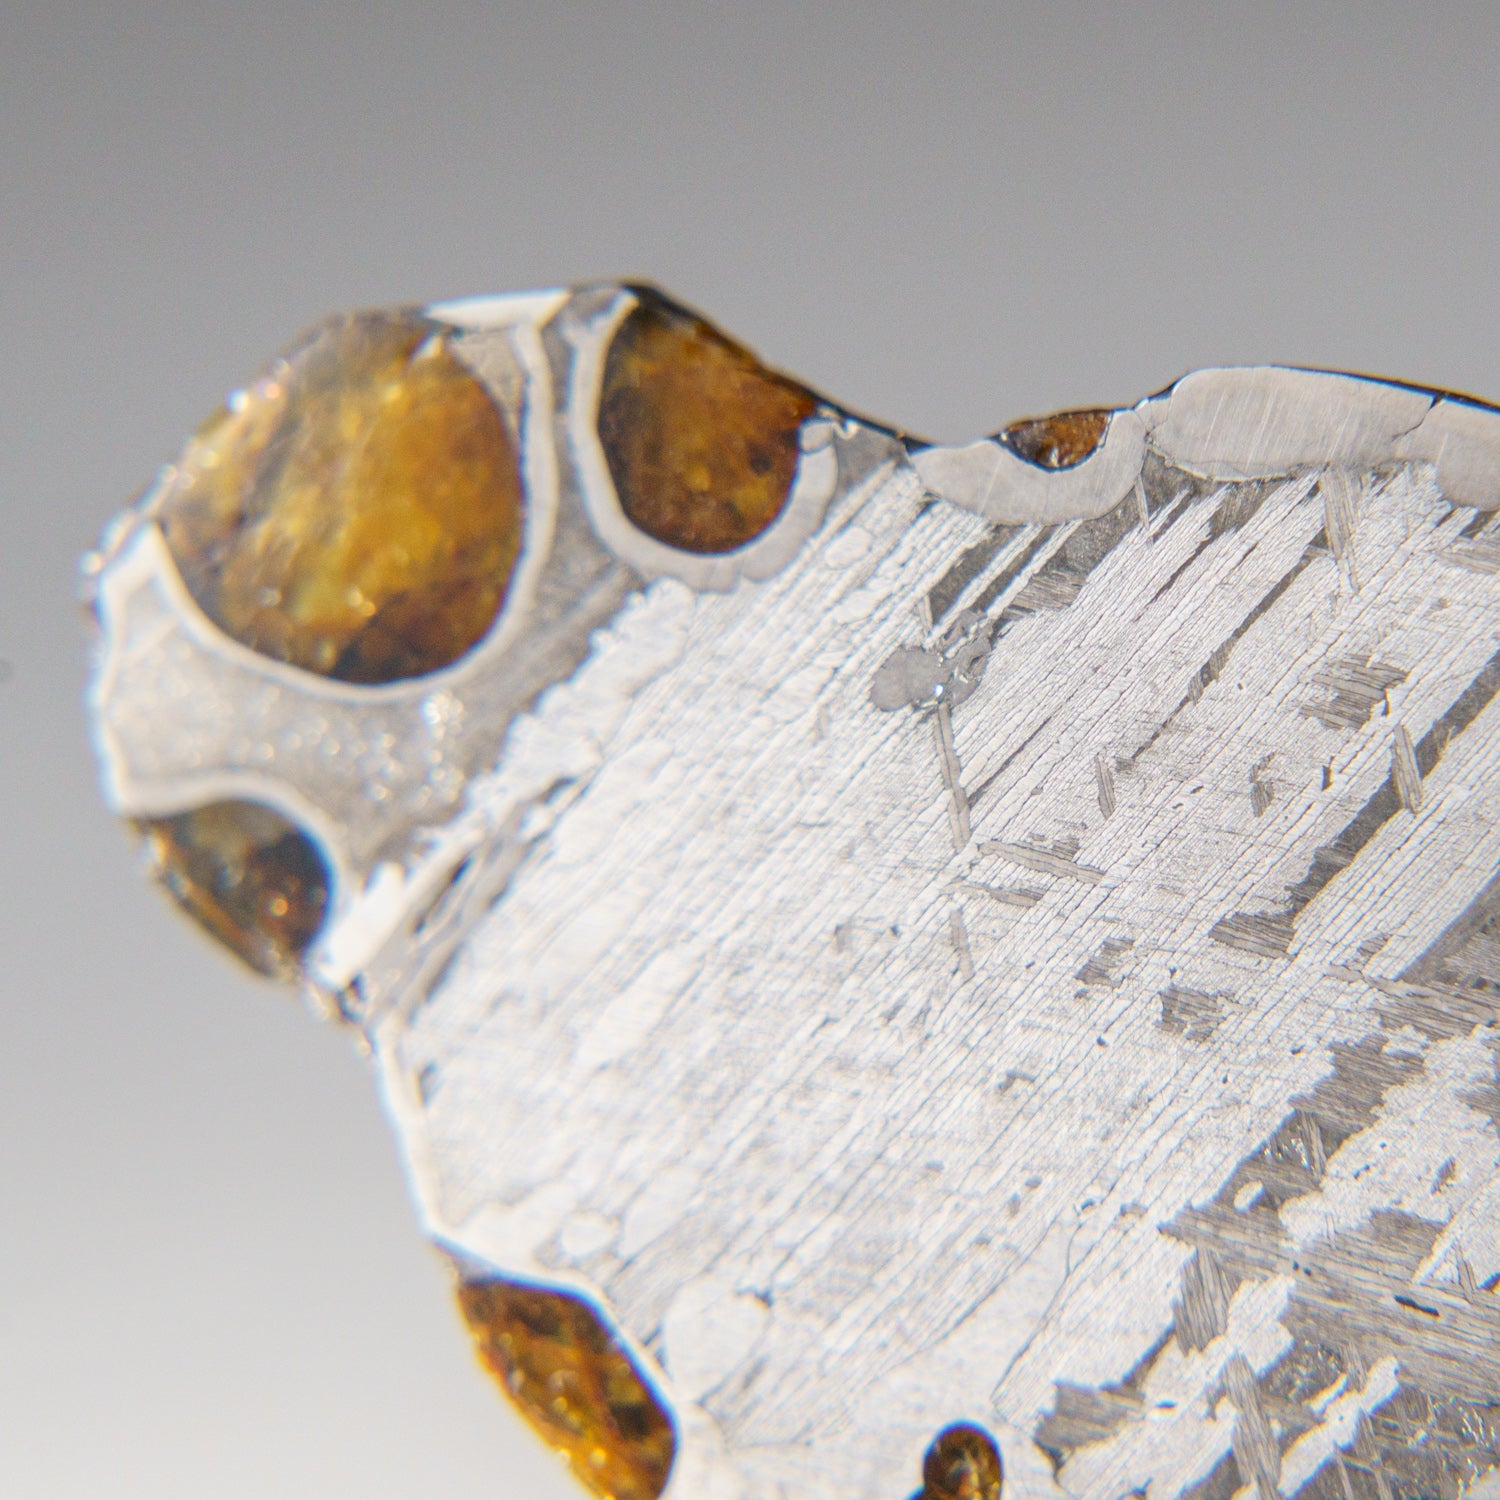 Genuine Brenhama Pallasite Meteorite Slice (13 grams)